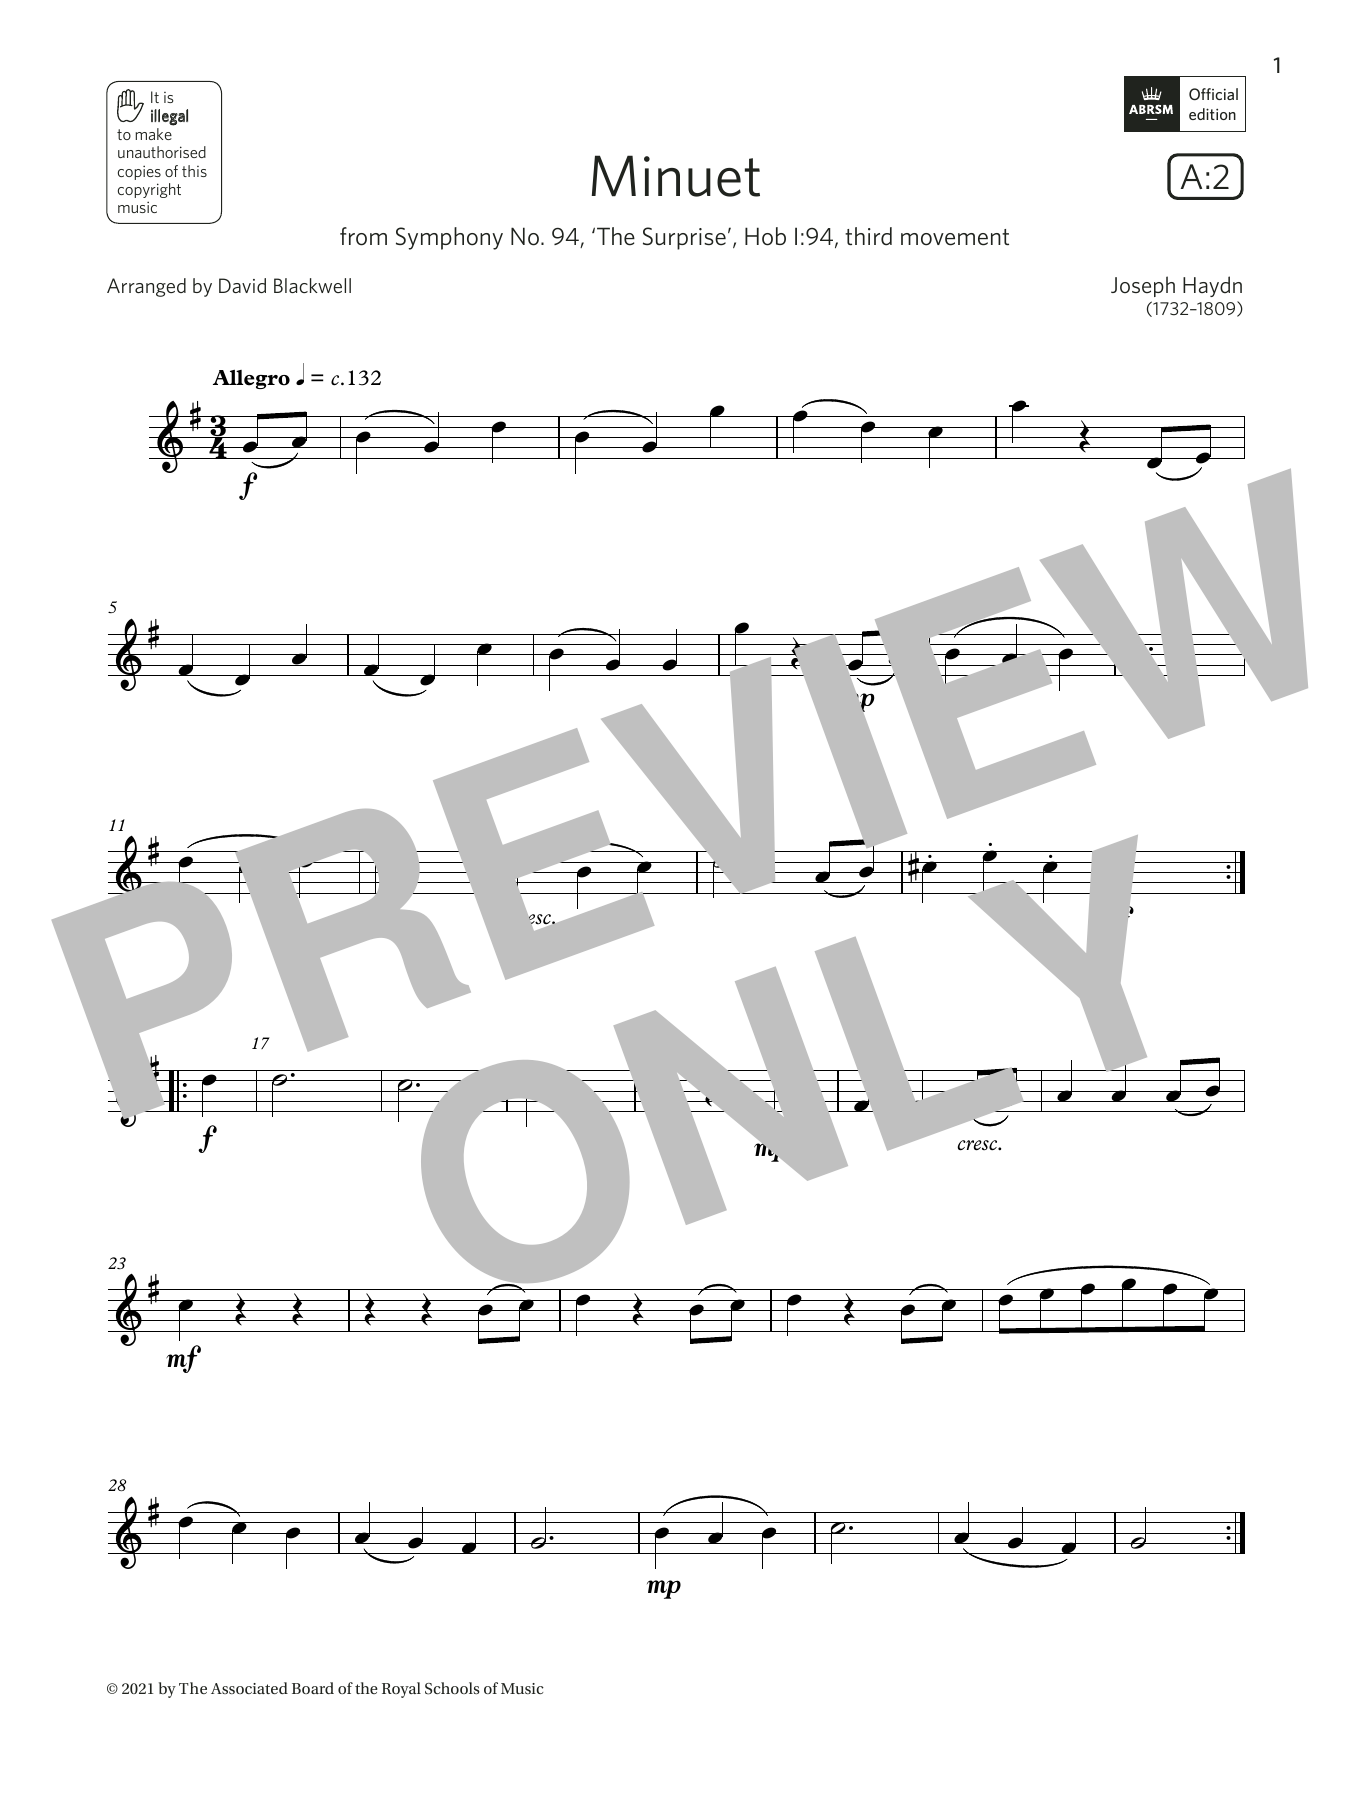 Download Joseph Haydn Minuet (from Symphony No. 94) (Grade 1 Sheet Music